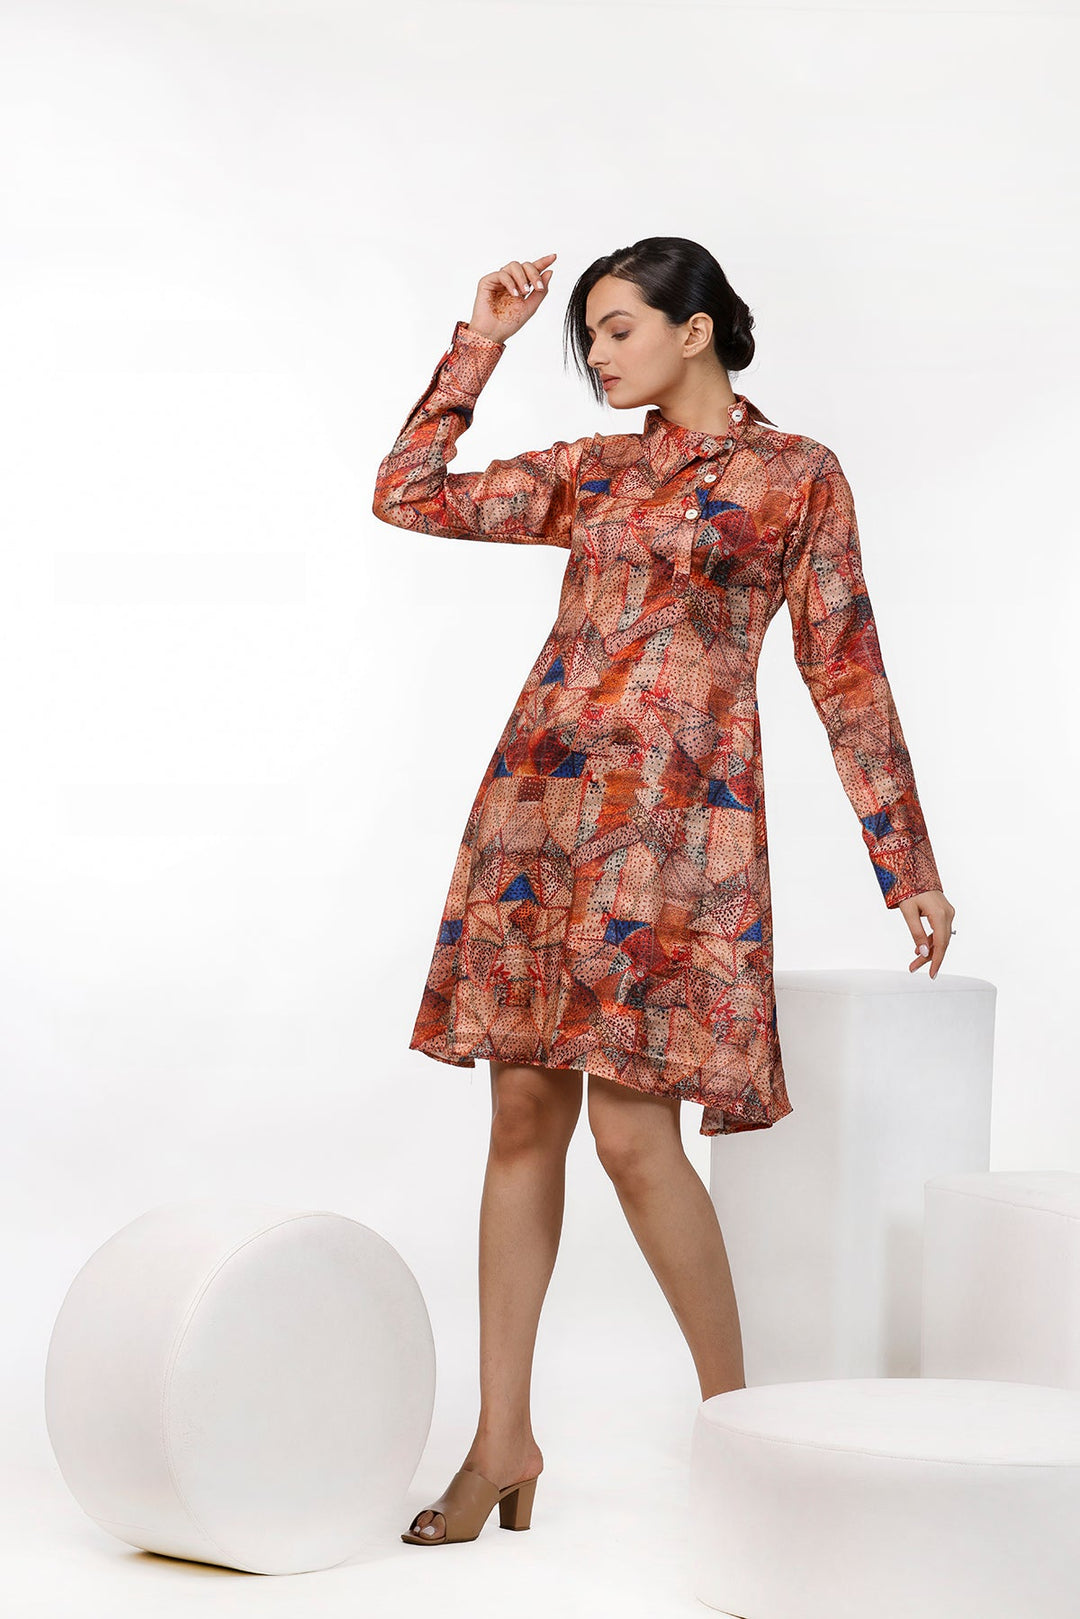 Doted Pattern Digital Print Dress